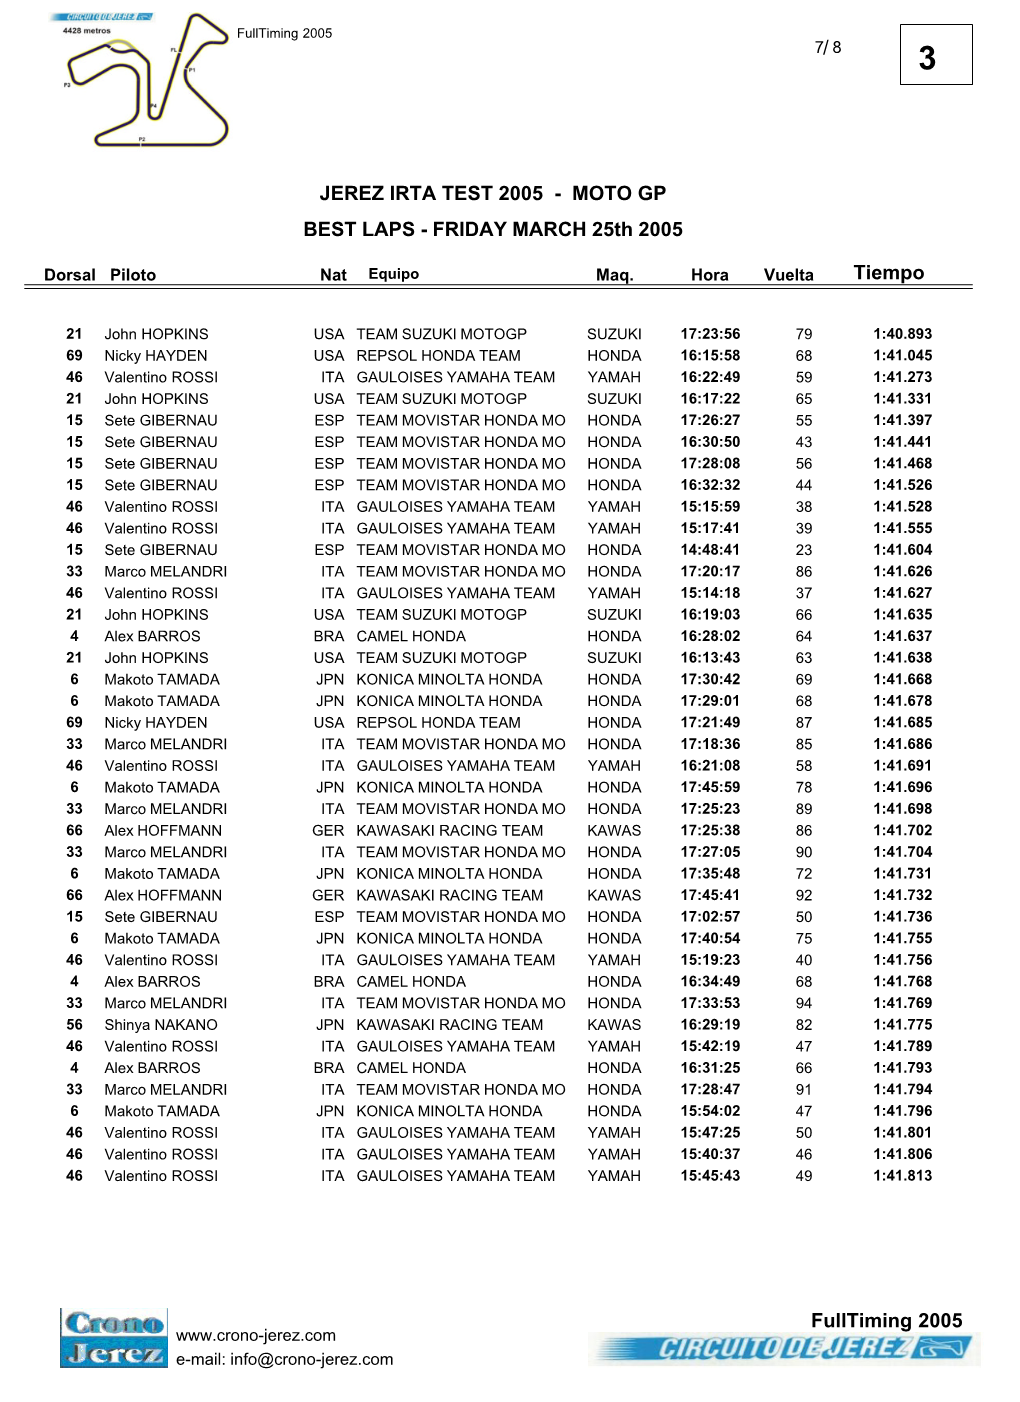 JEREZ IRTA TEST 2005 - MOTO GP BEST LAPS - FRIDAY MARCH 25Th 2005